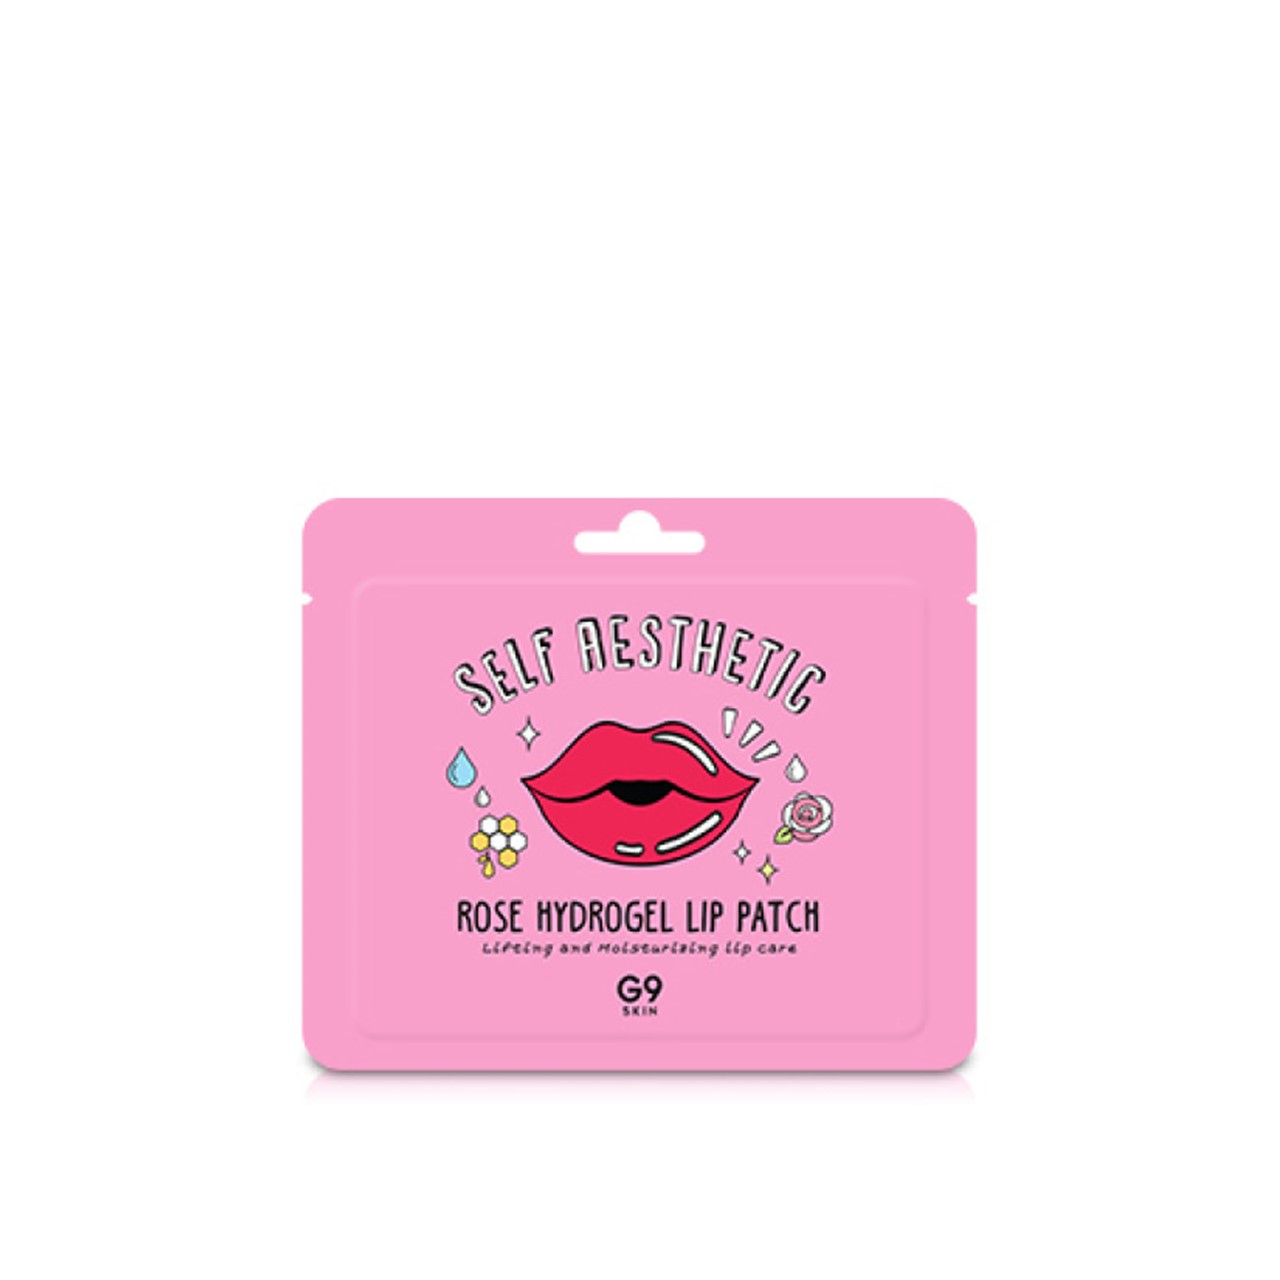 G9 Skin Self Aesthetic Rose Hydrogel Lip Patch 3g (0.11oz)